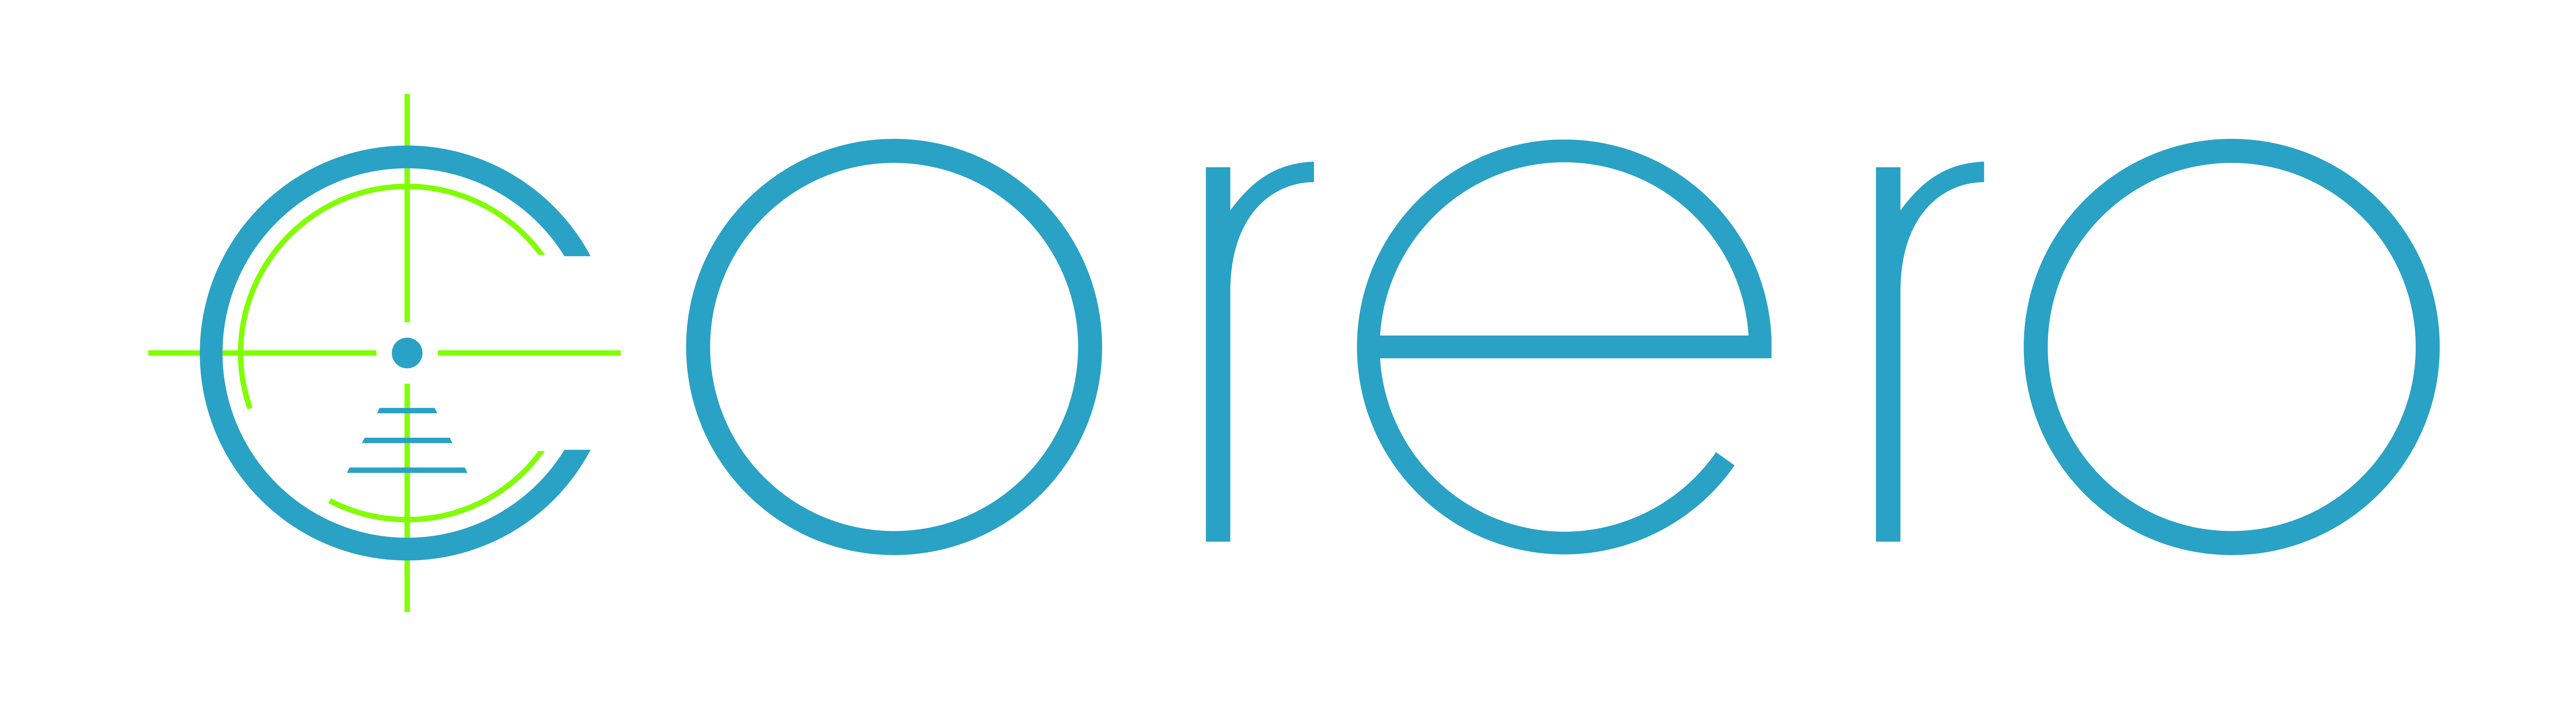 Corero Logo